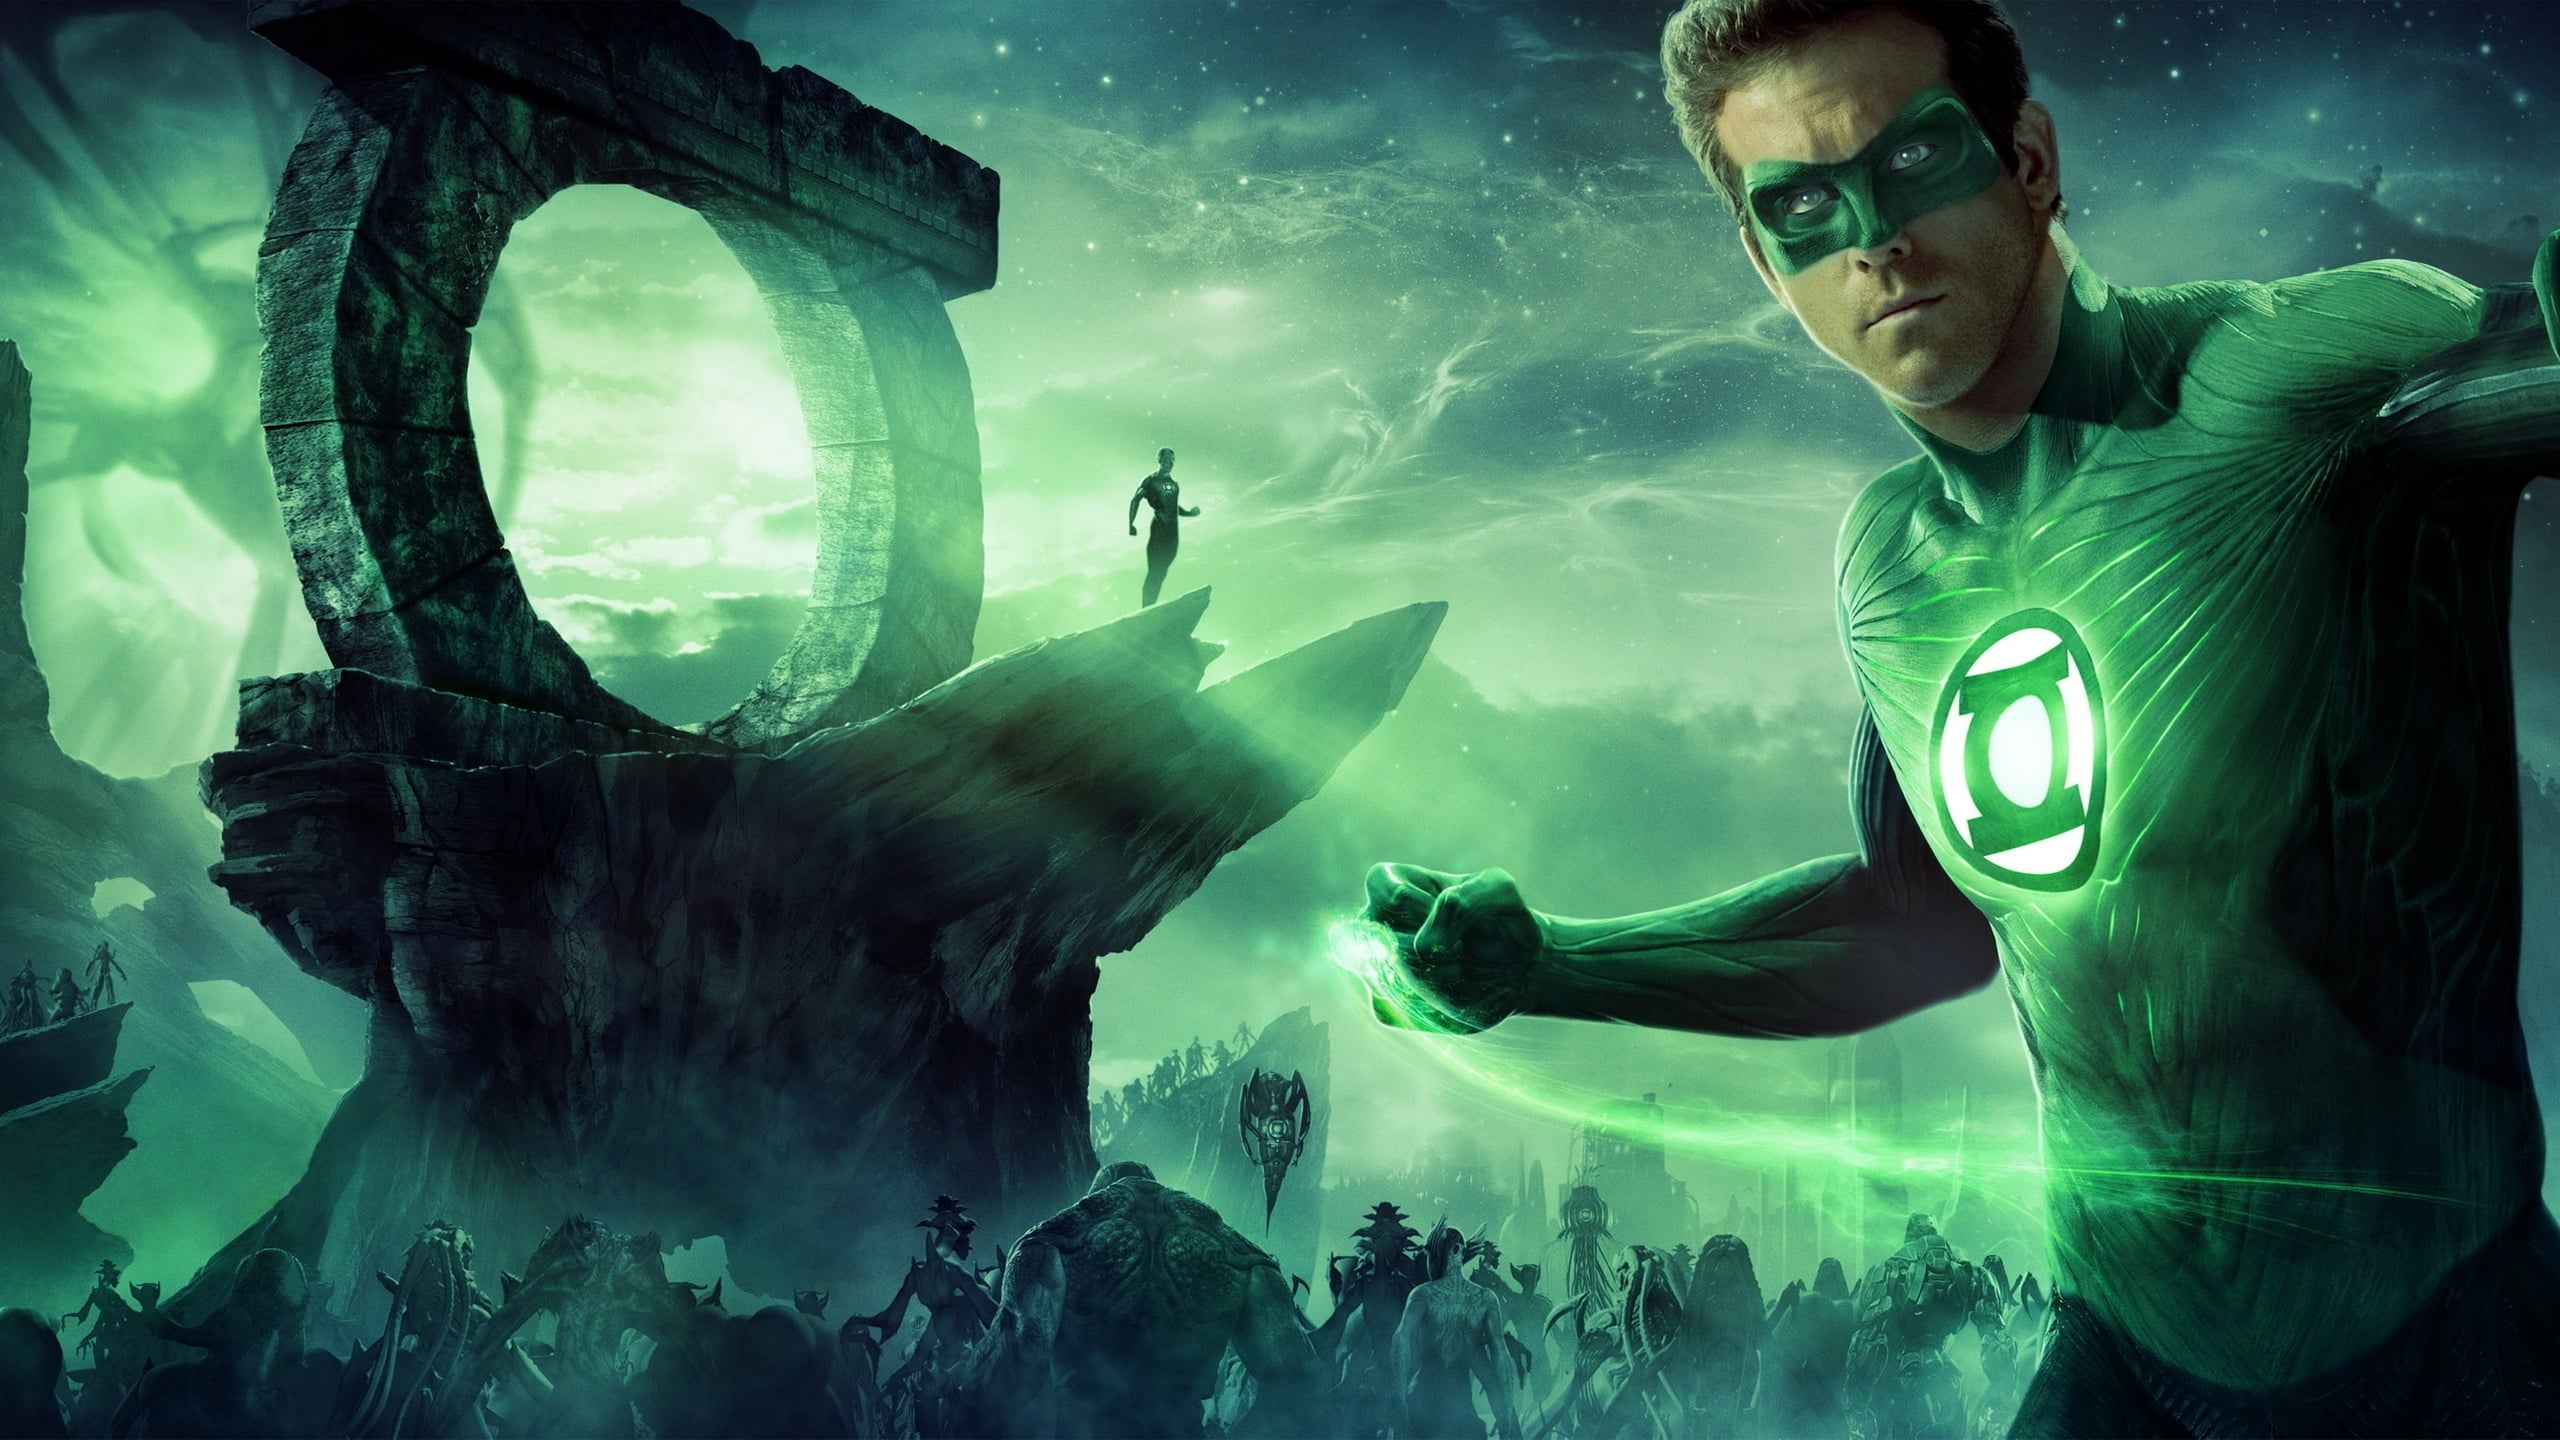 Pozadi k filmu Green Lantern / Green Lantern rok 2011 